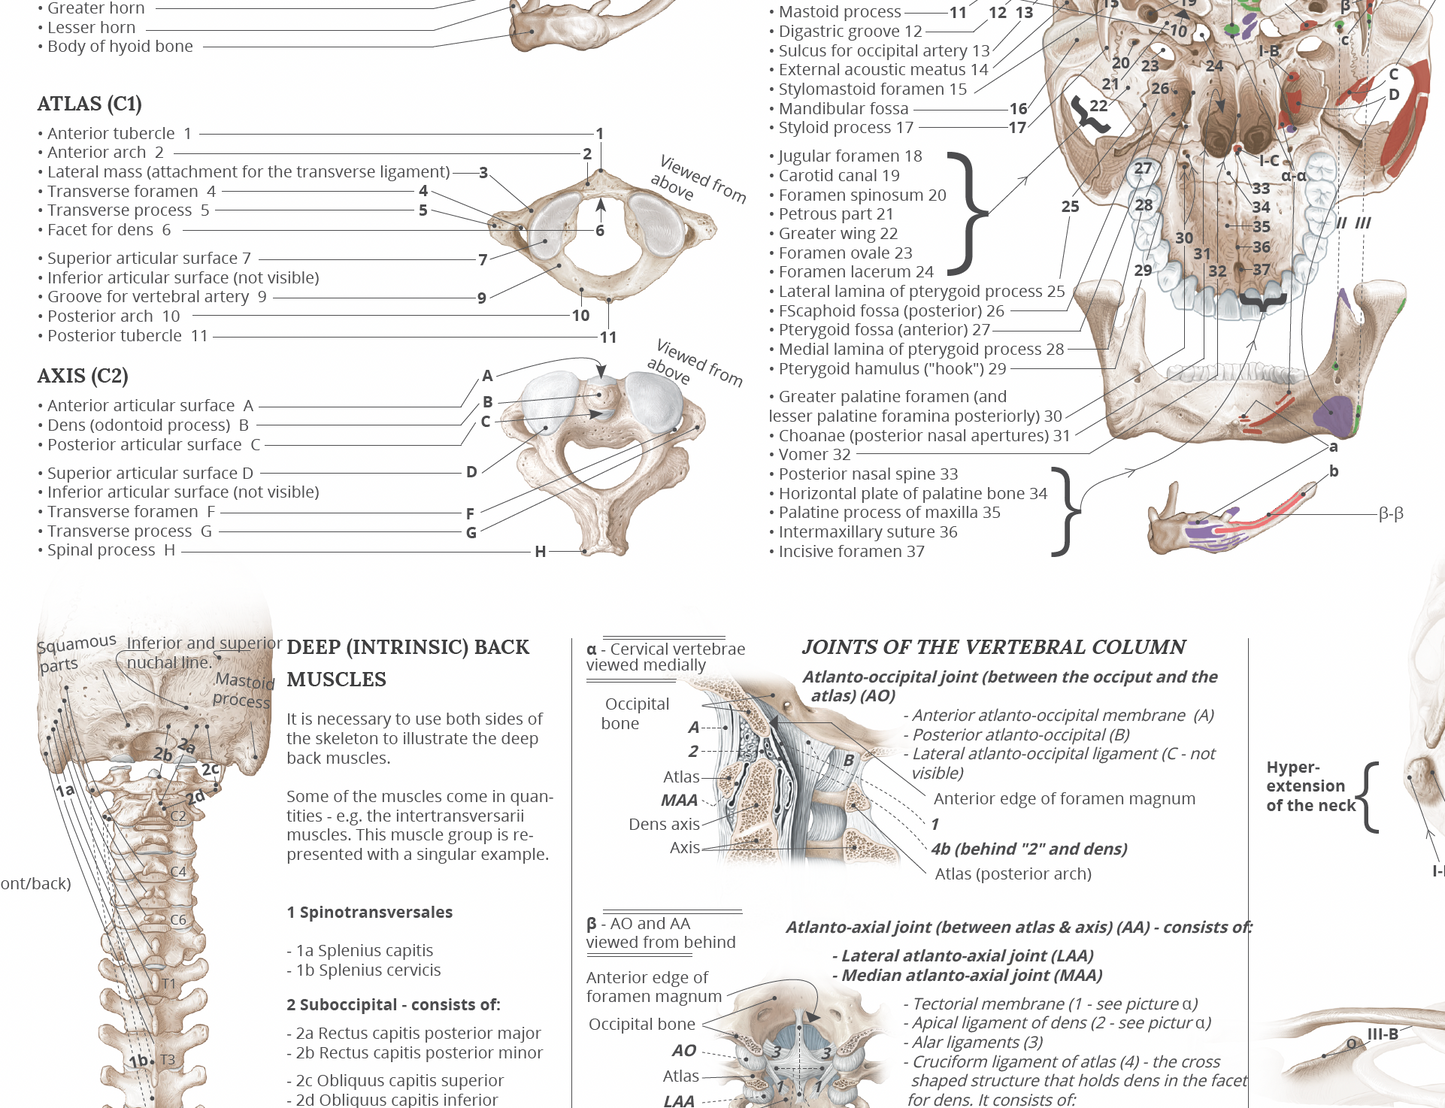 Anatomi plakat - Bevægeapparatets anatomi EA1